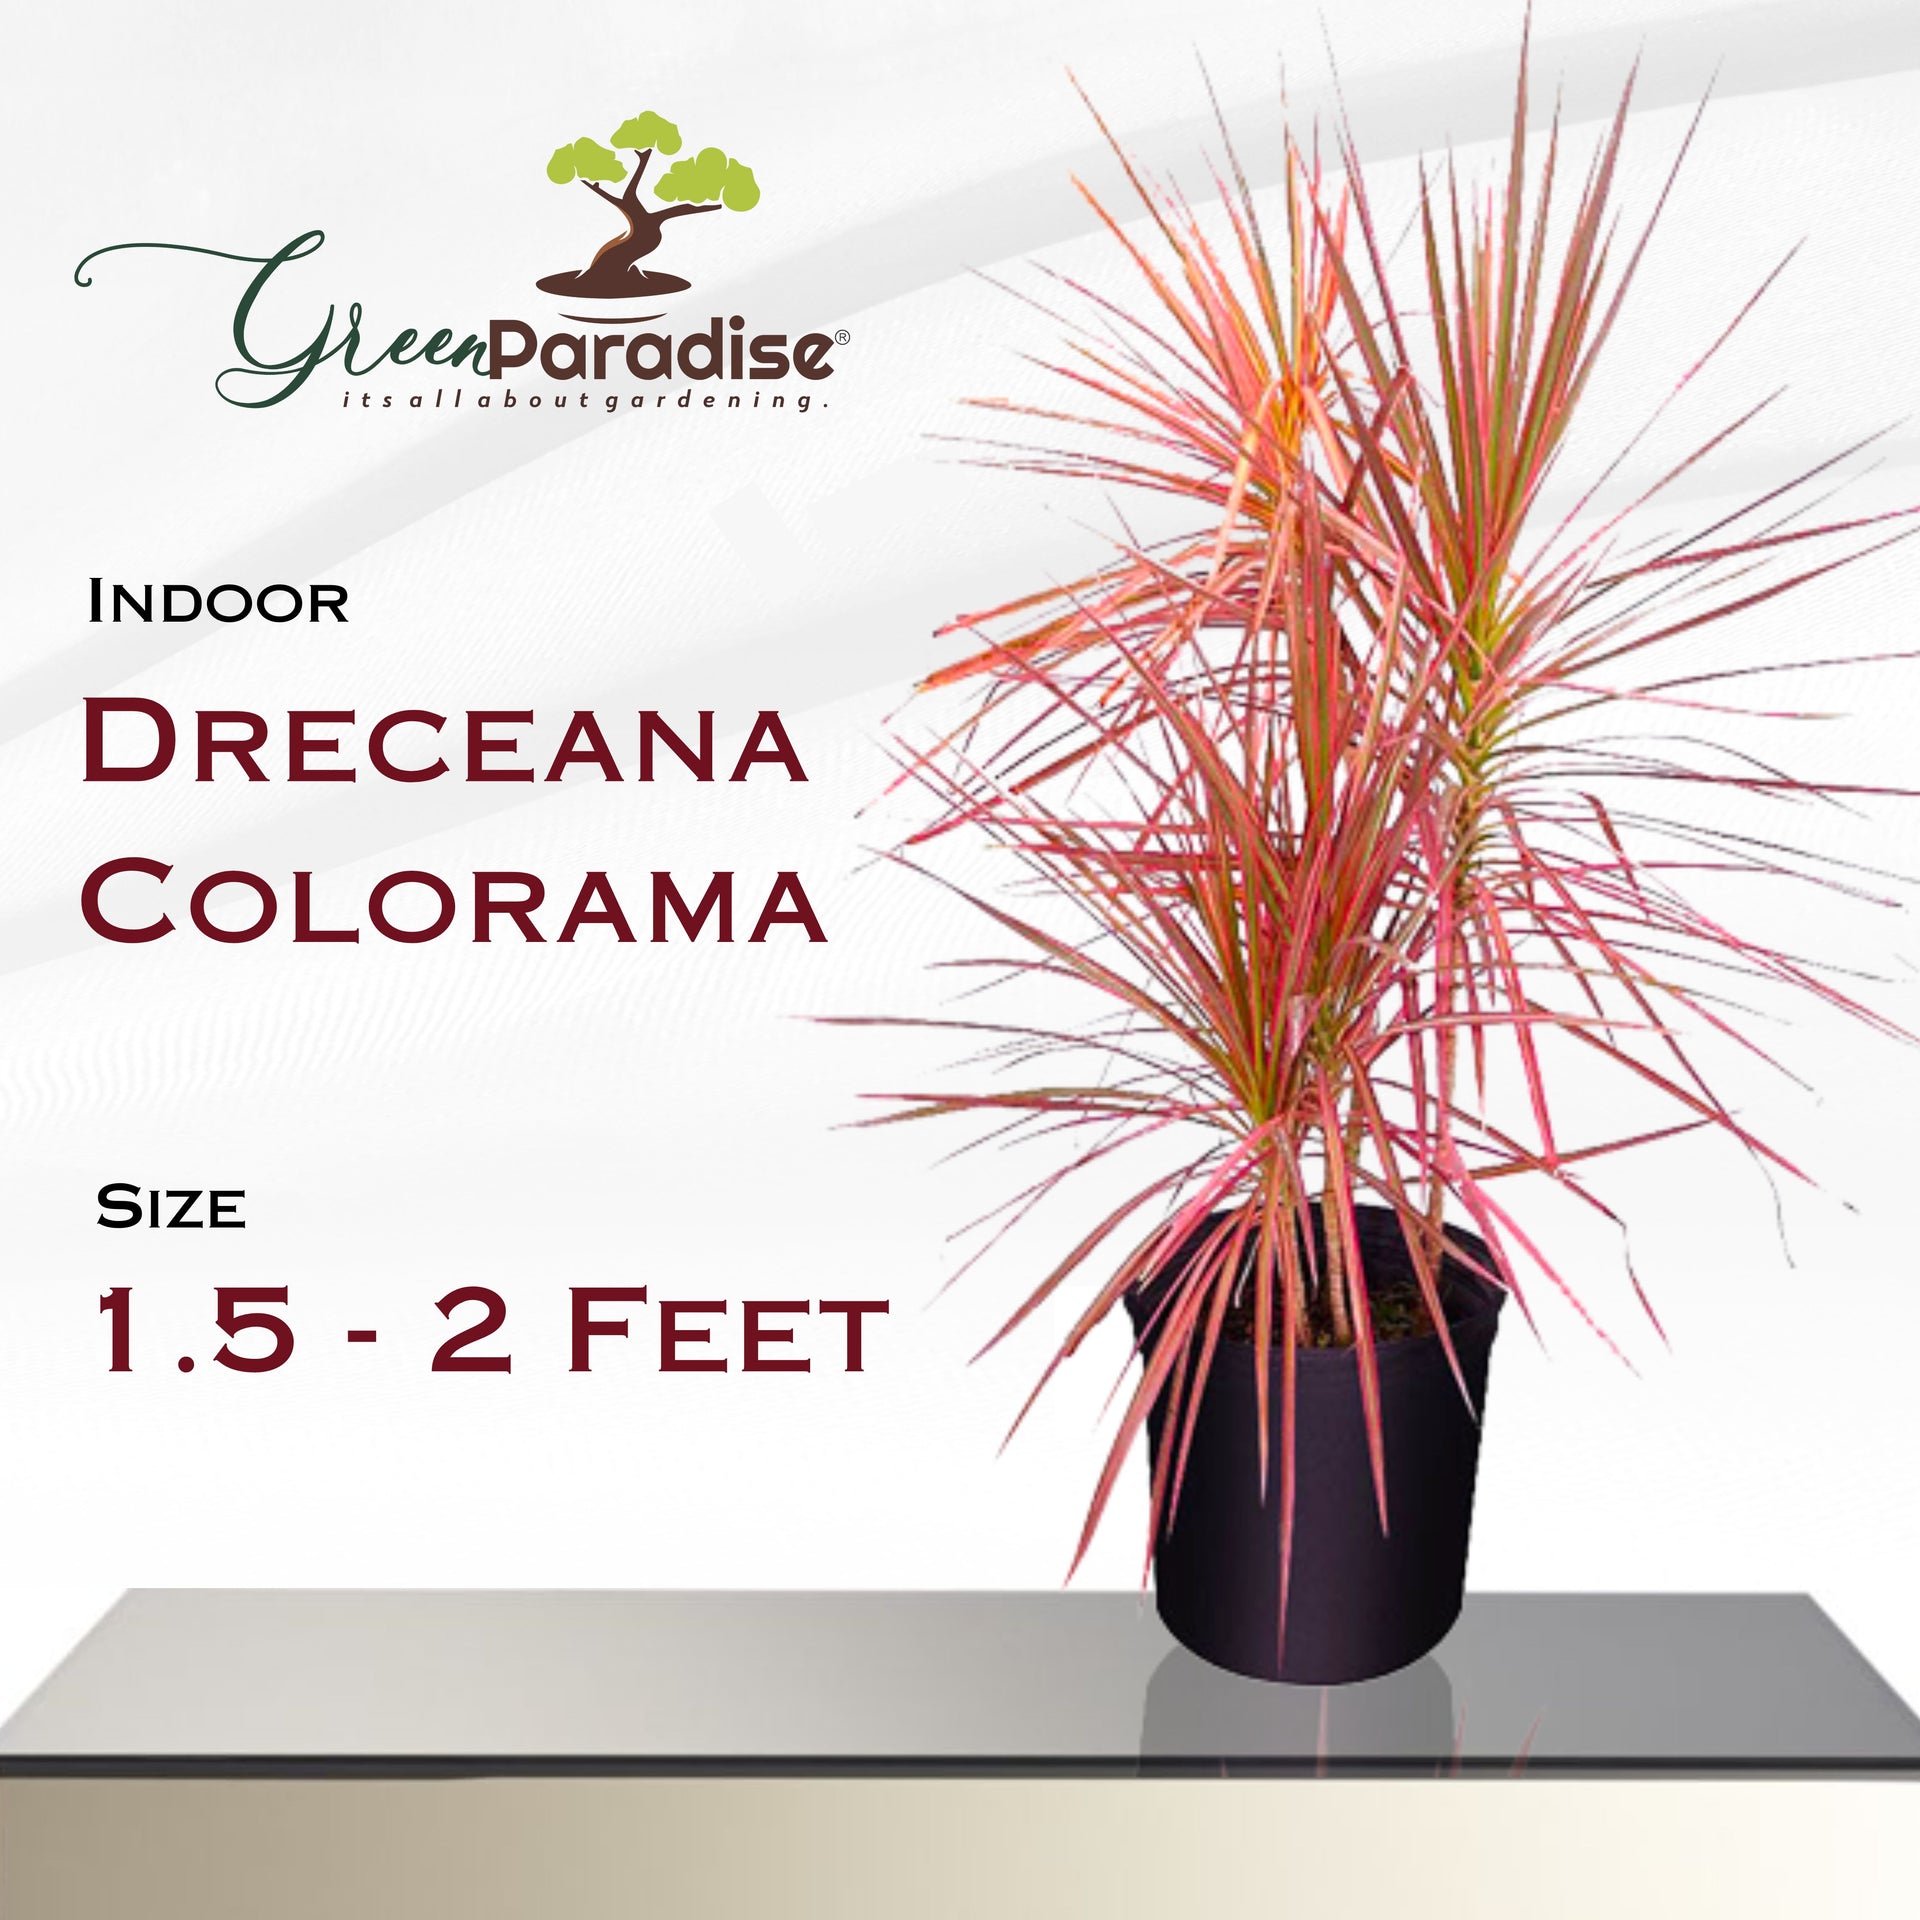 Dreceana Colorama Indoor Live Plant